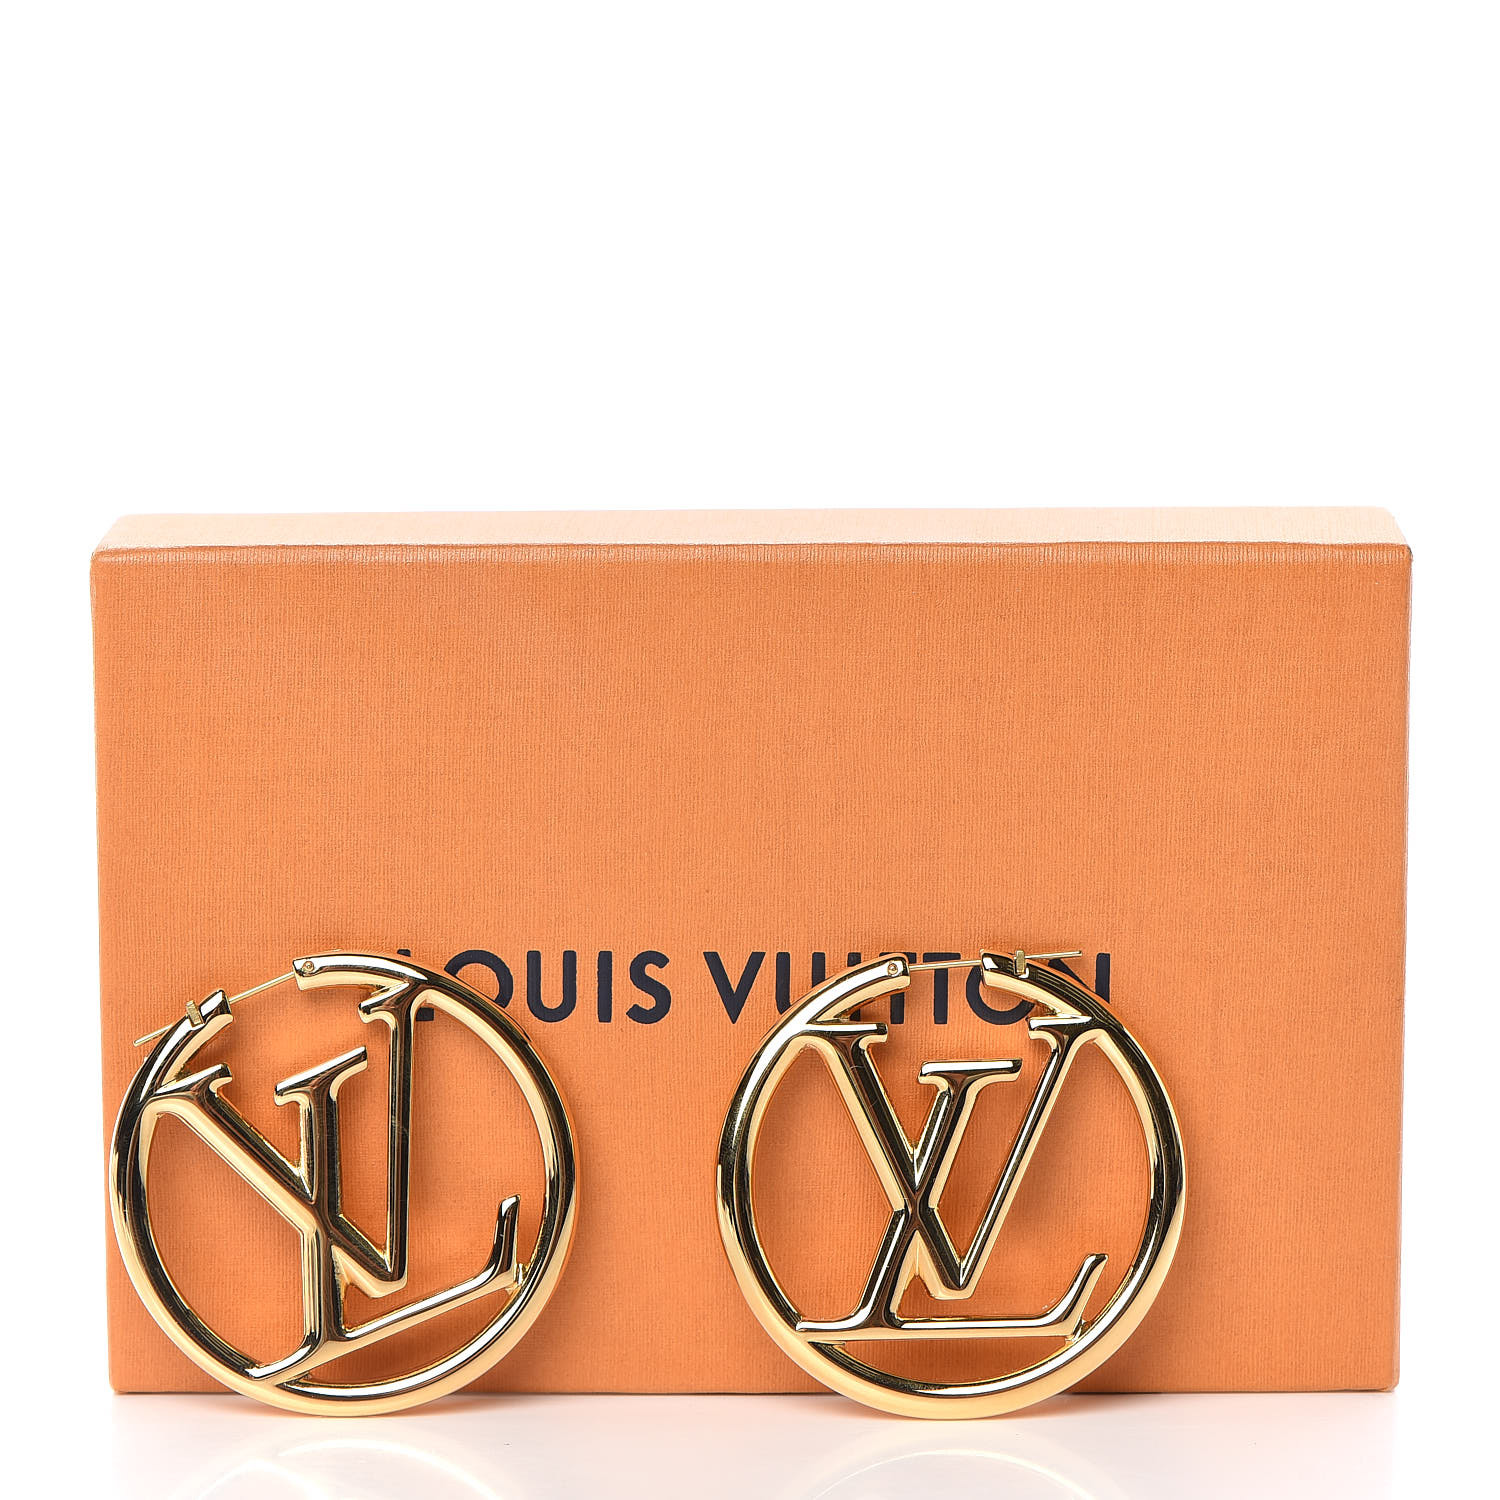 Louis Vuitton Louise Hoop Earrings, Gold